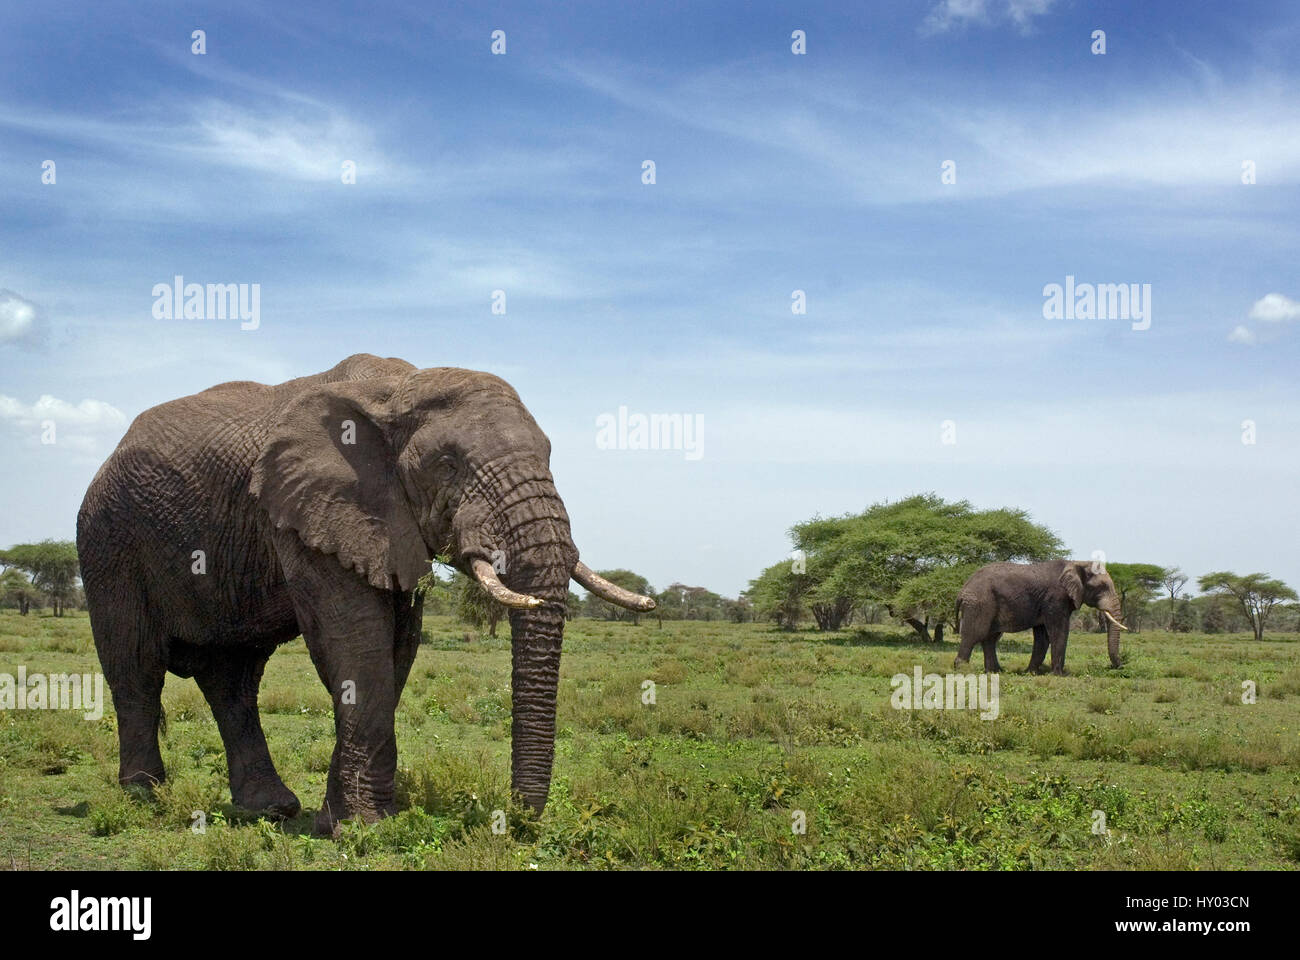 African elephant (Loxodonta africana), Tanzania, Africa. Stock Photo